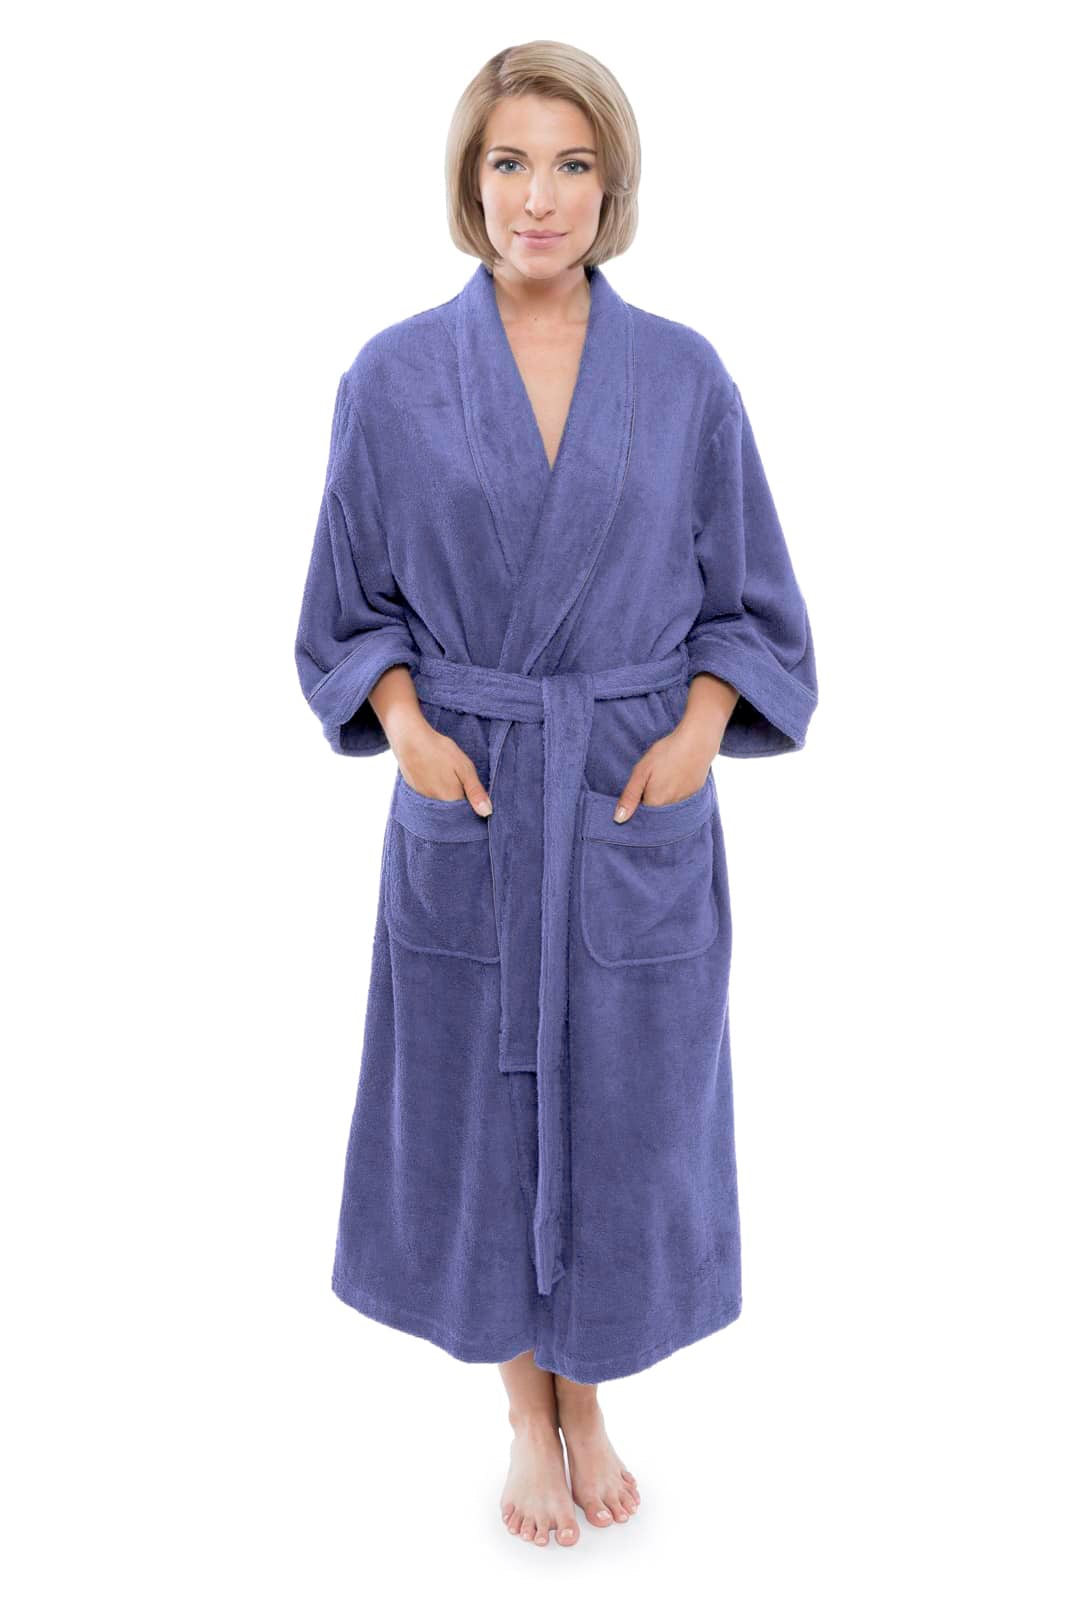 terry cloth robe womens